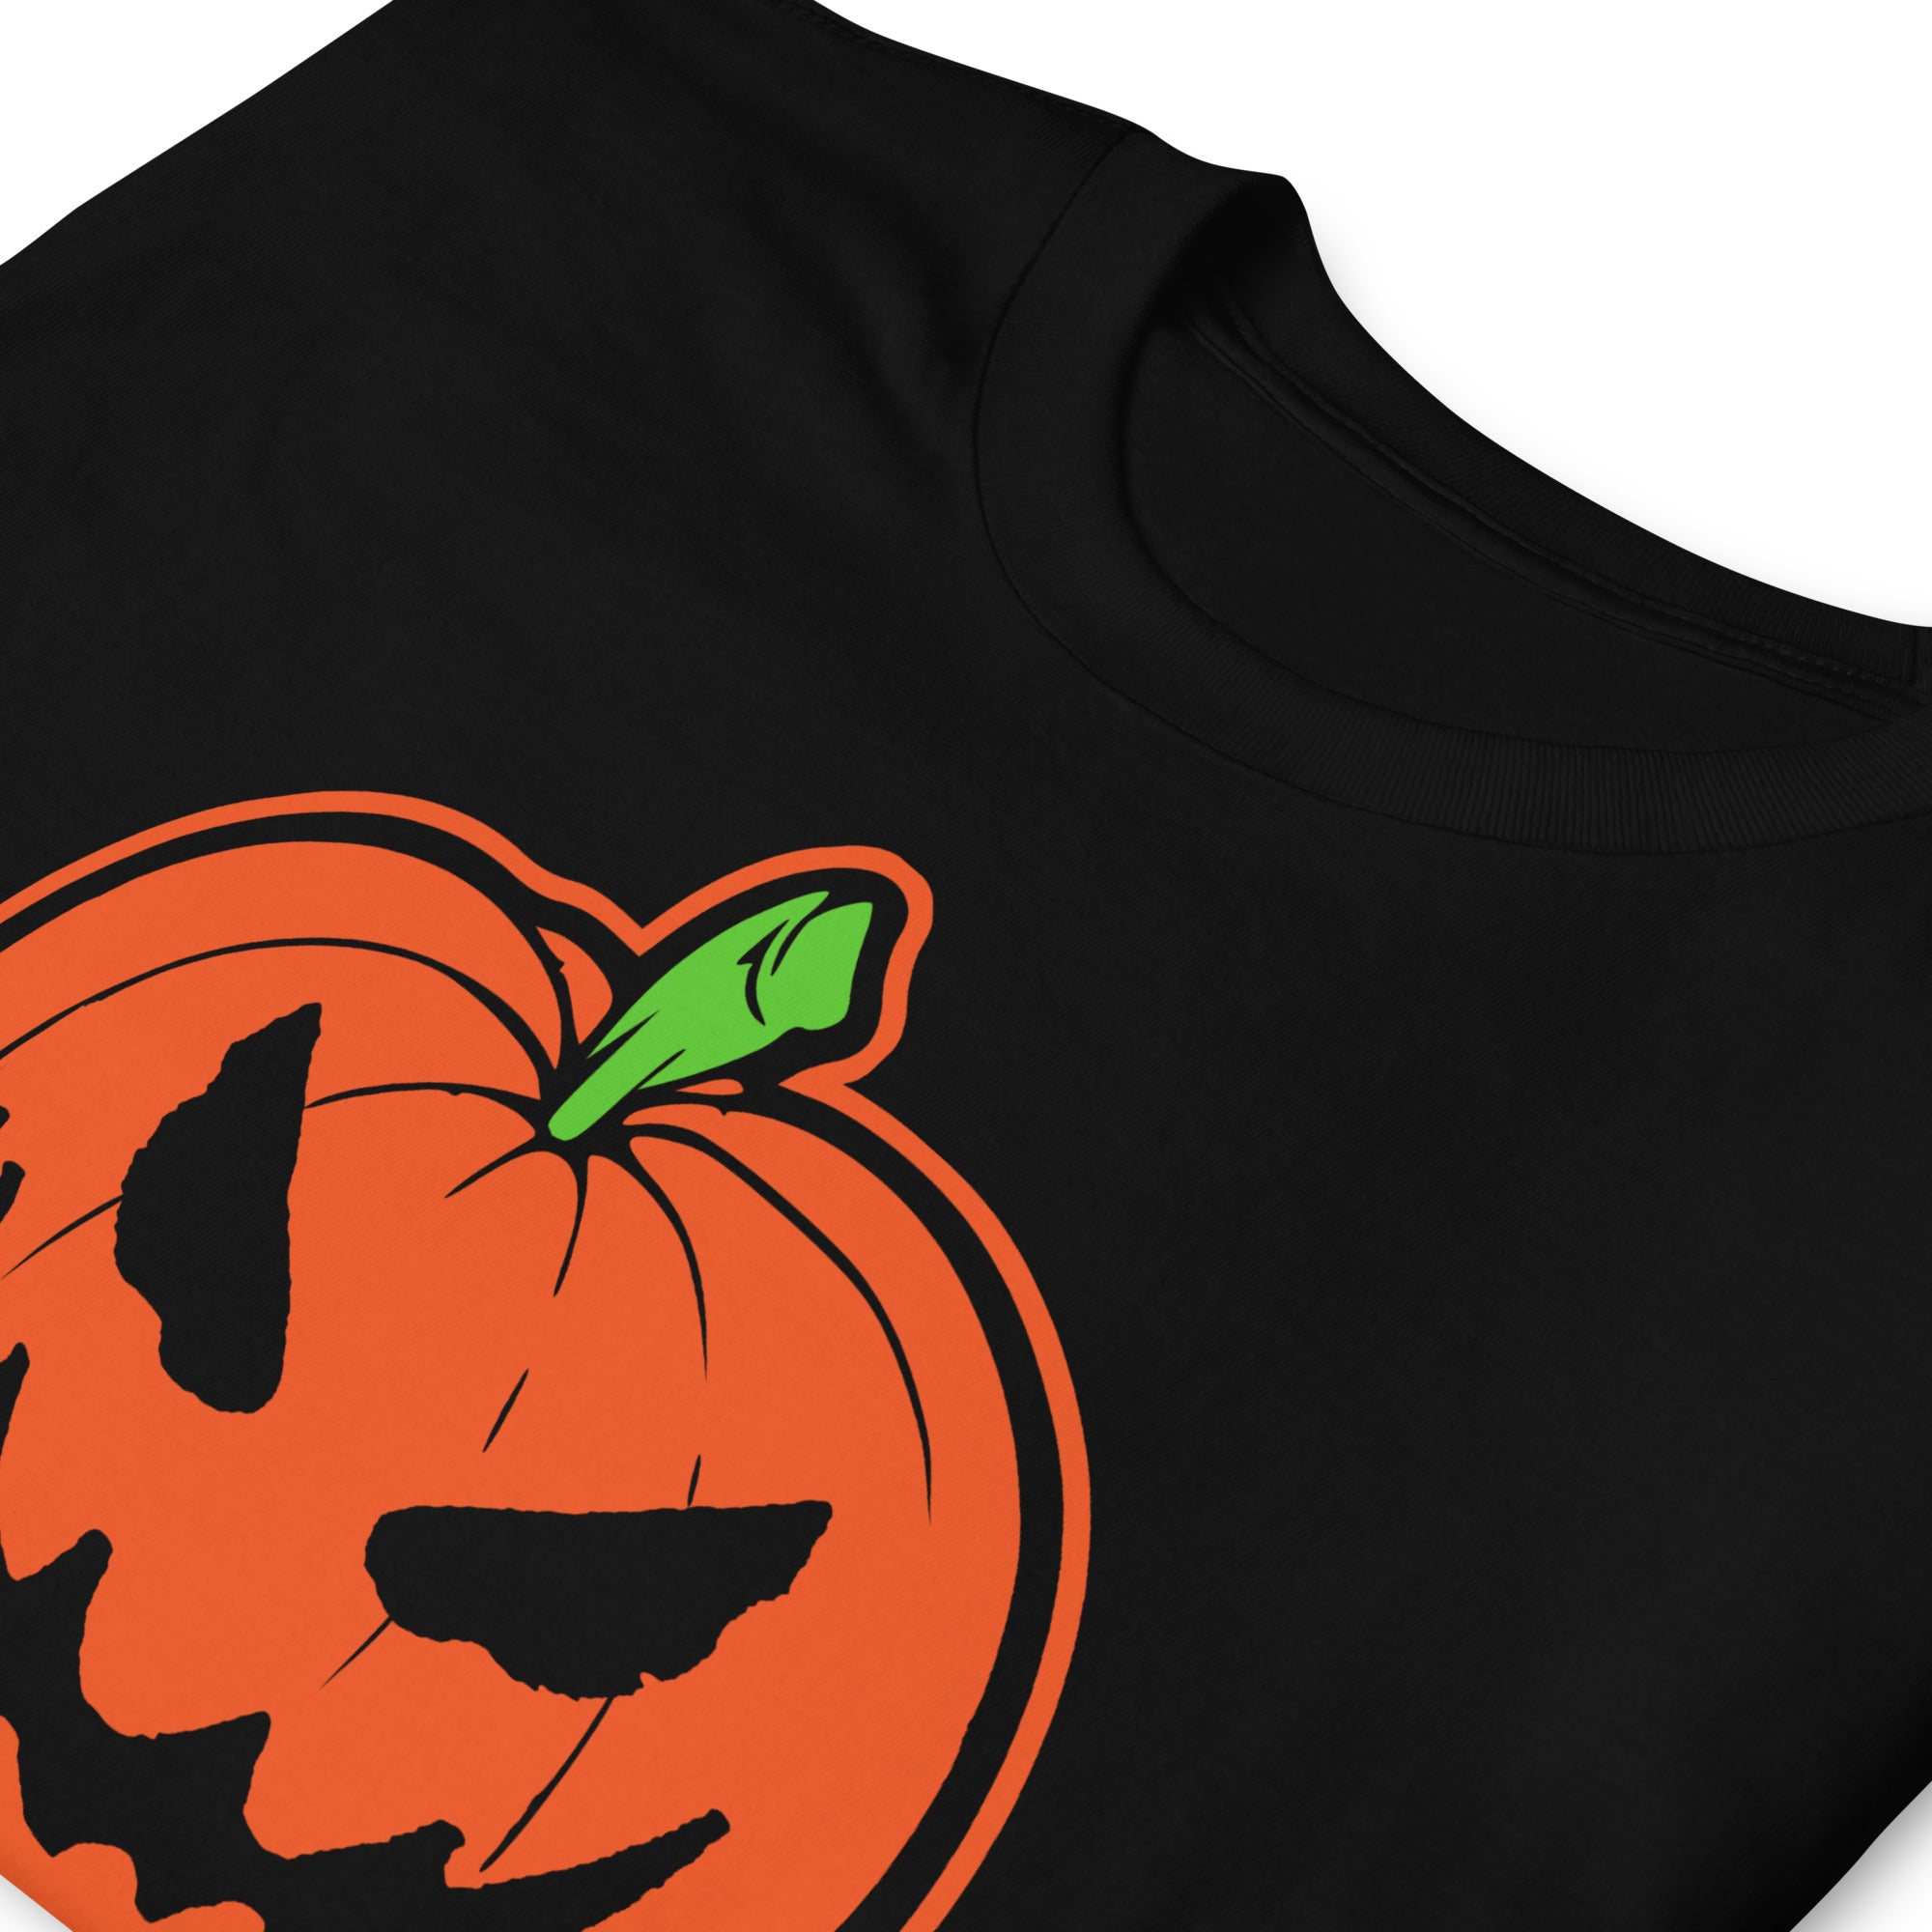 Jack O Lantern Scary Halloween Pumpkin Short-Sleeve T-Shirt